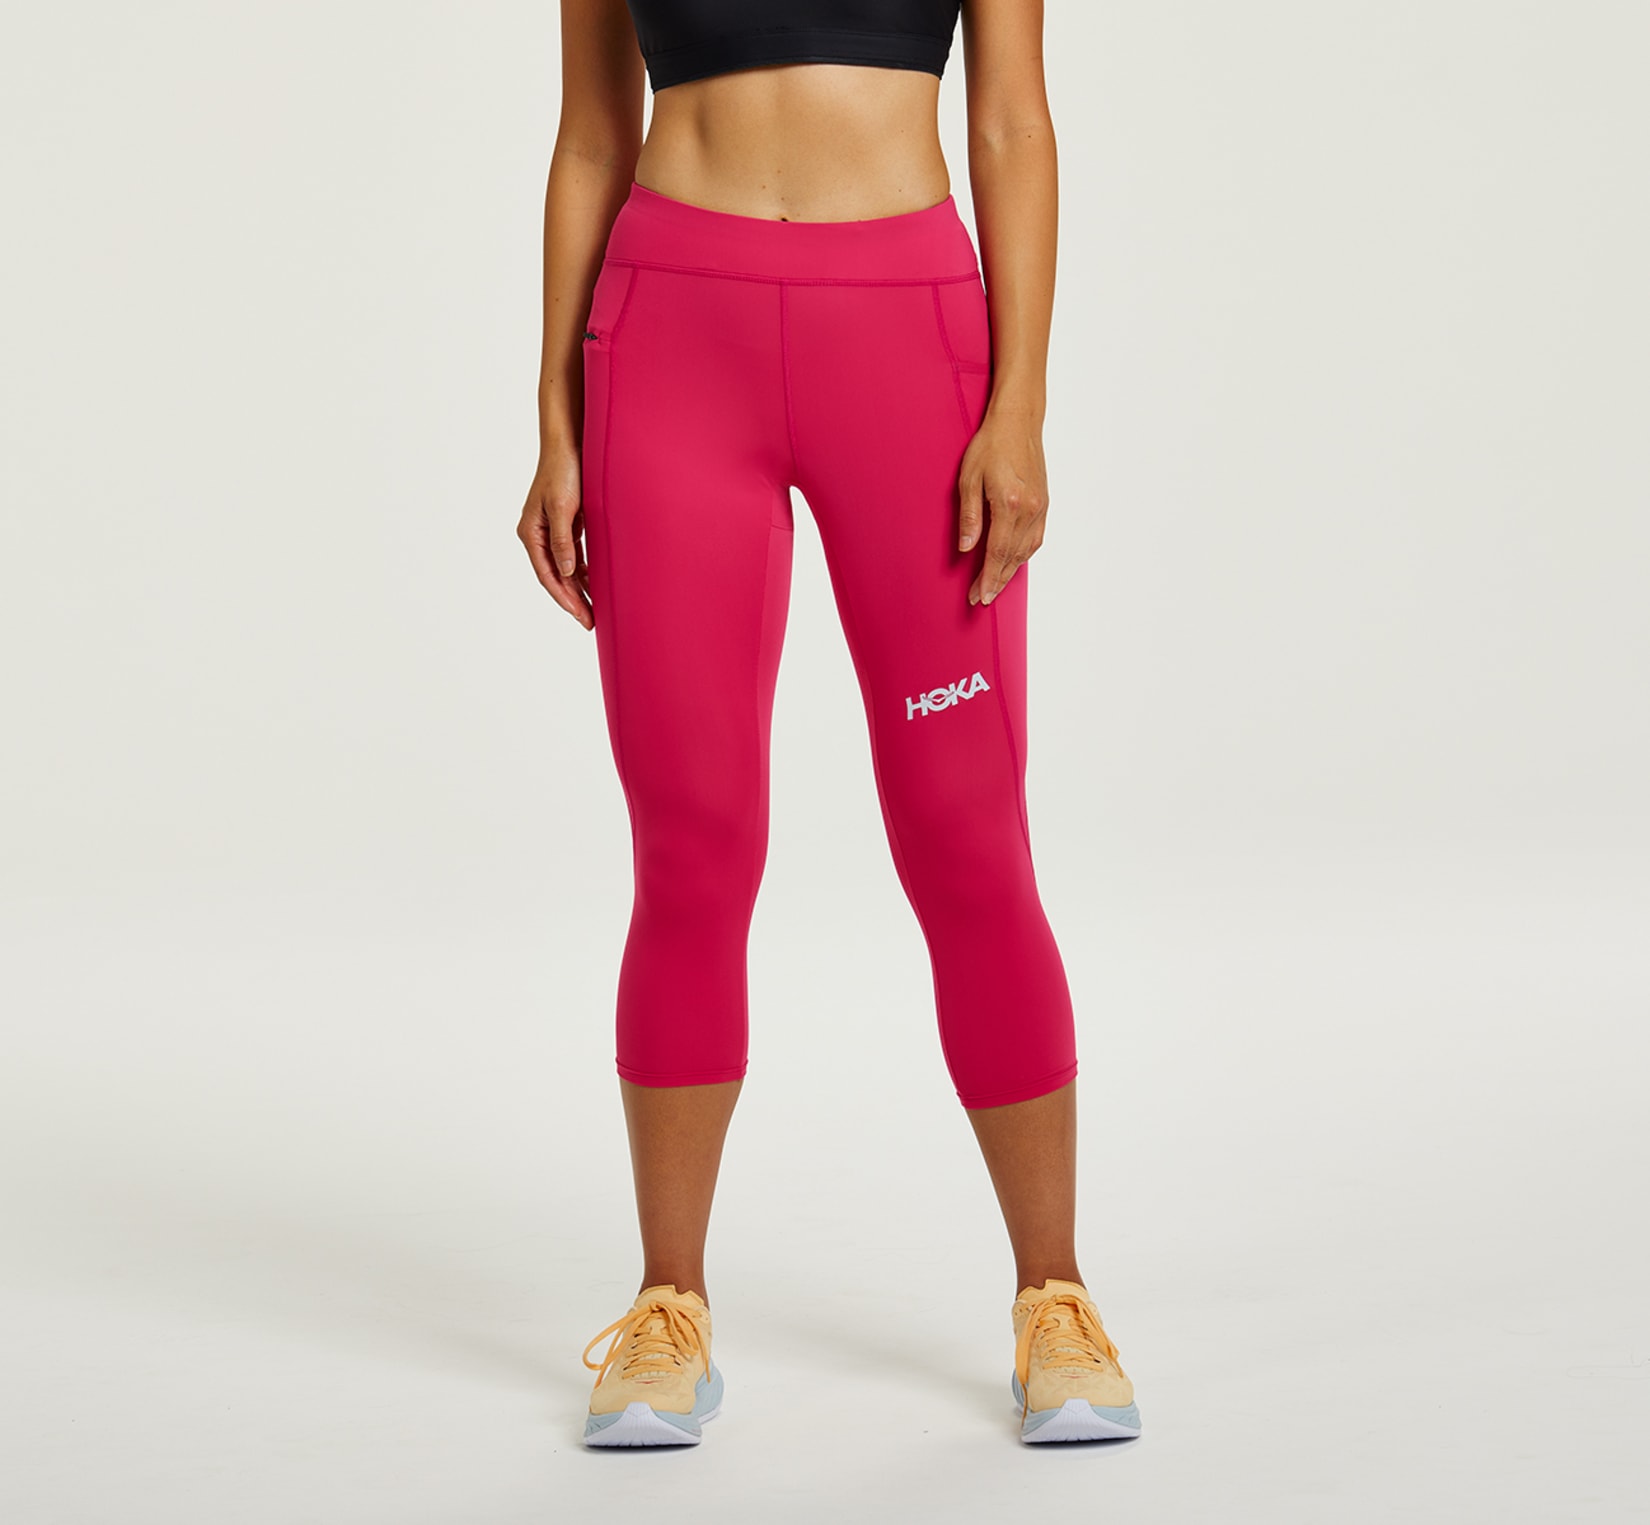 Women Stretch Running Crossfit Athletic Fitness Capri Yoga Pants